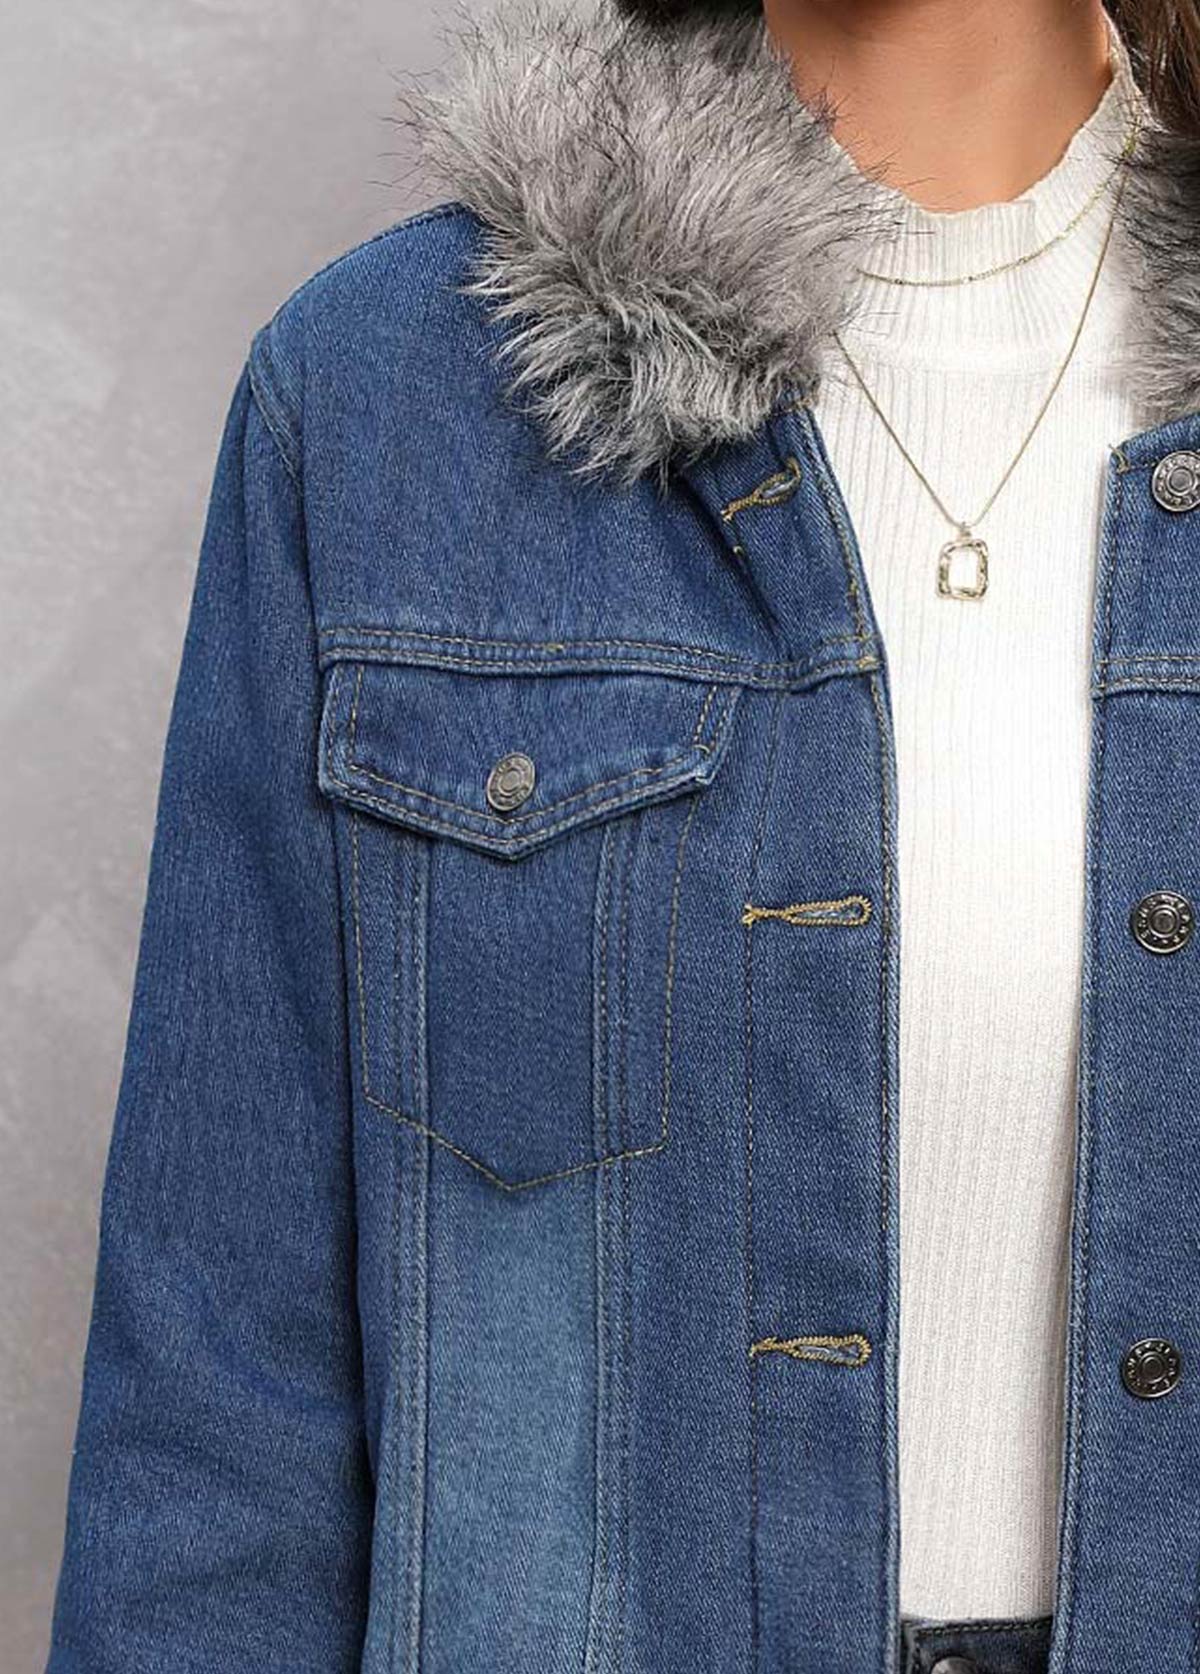 Denim Blue Fur Collar Long Sleeve Hooded Coat